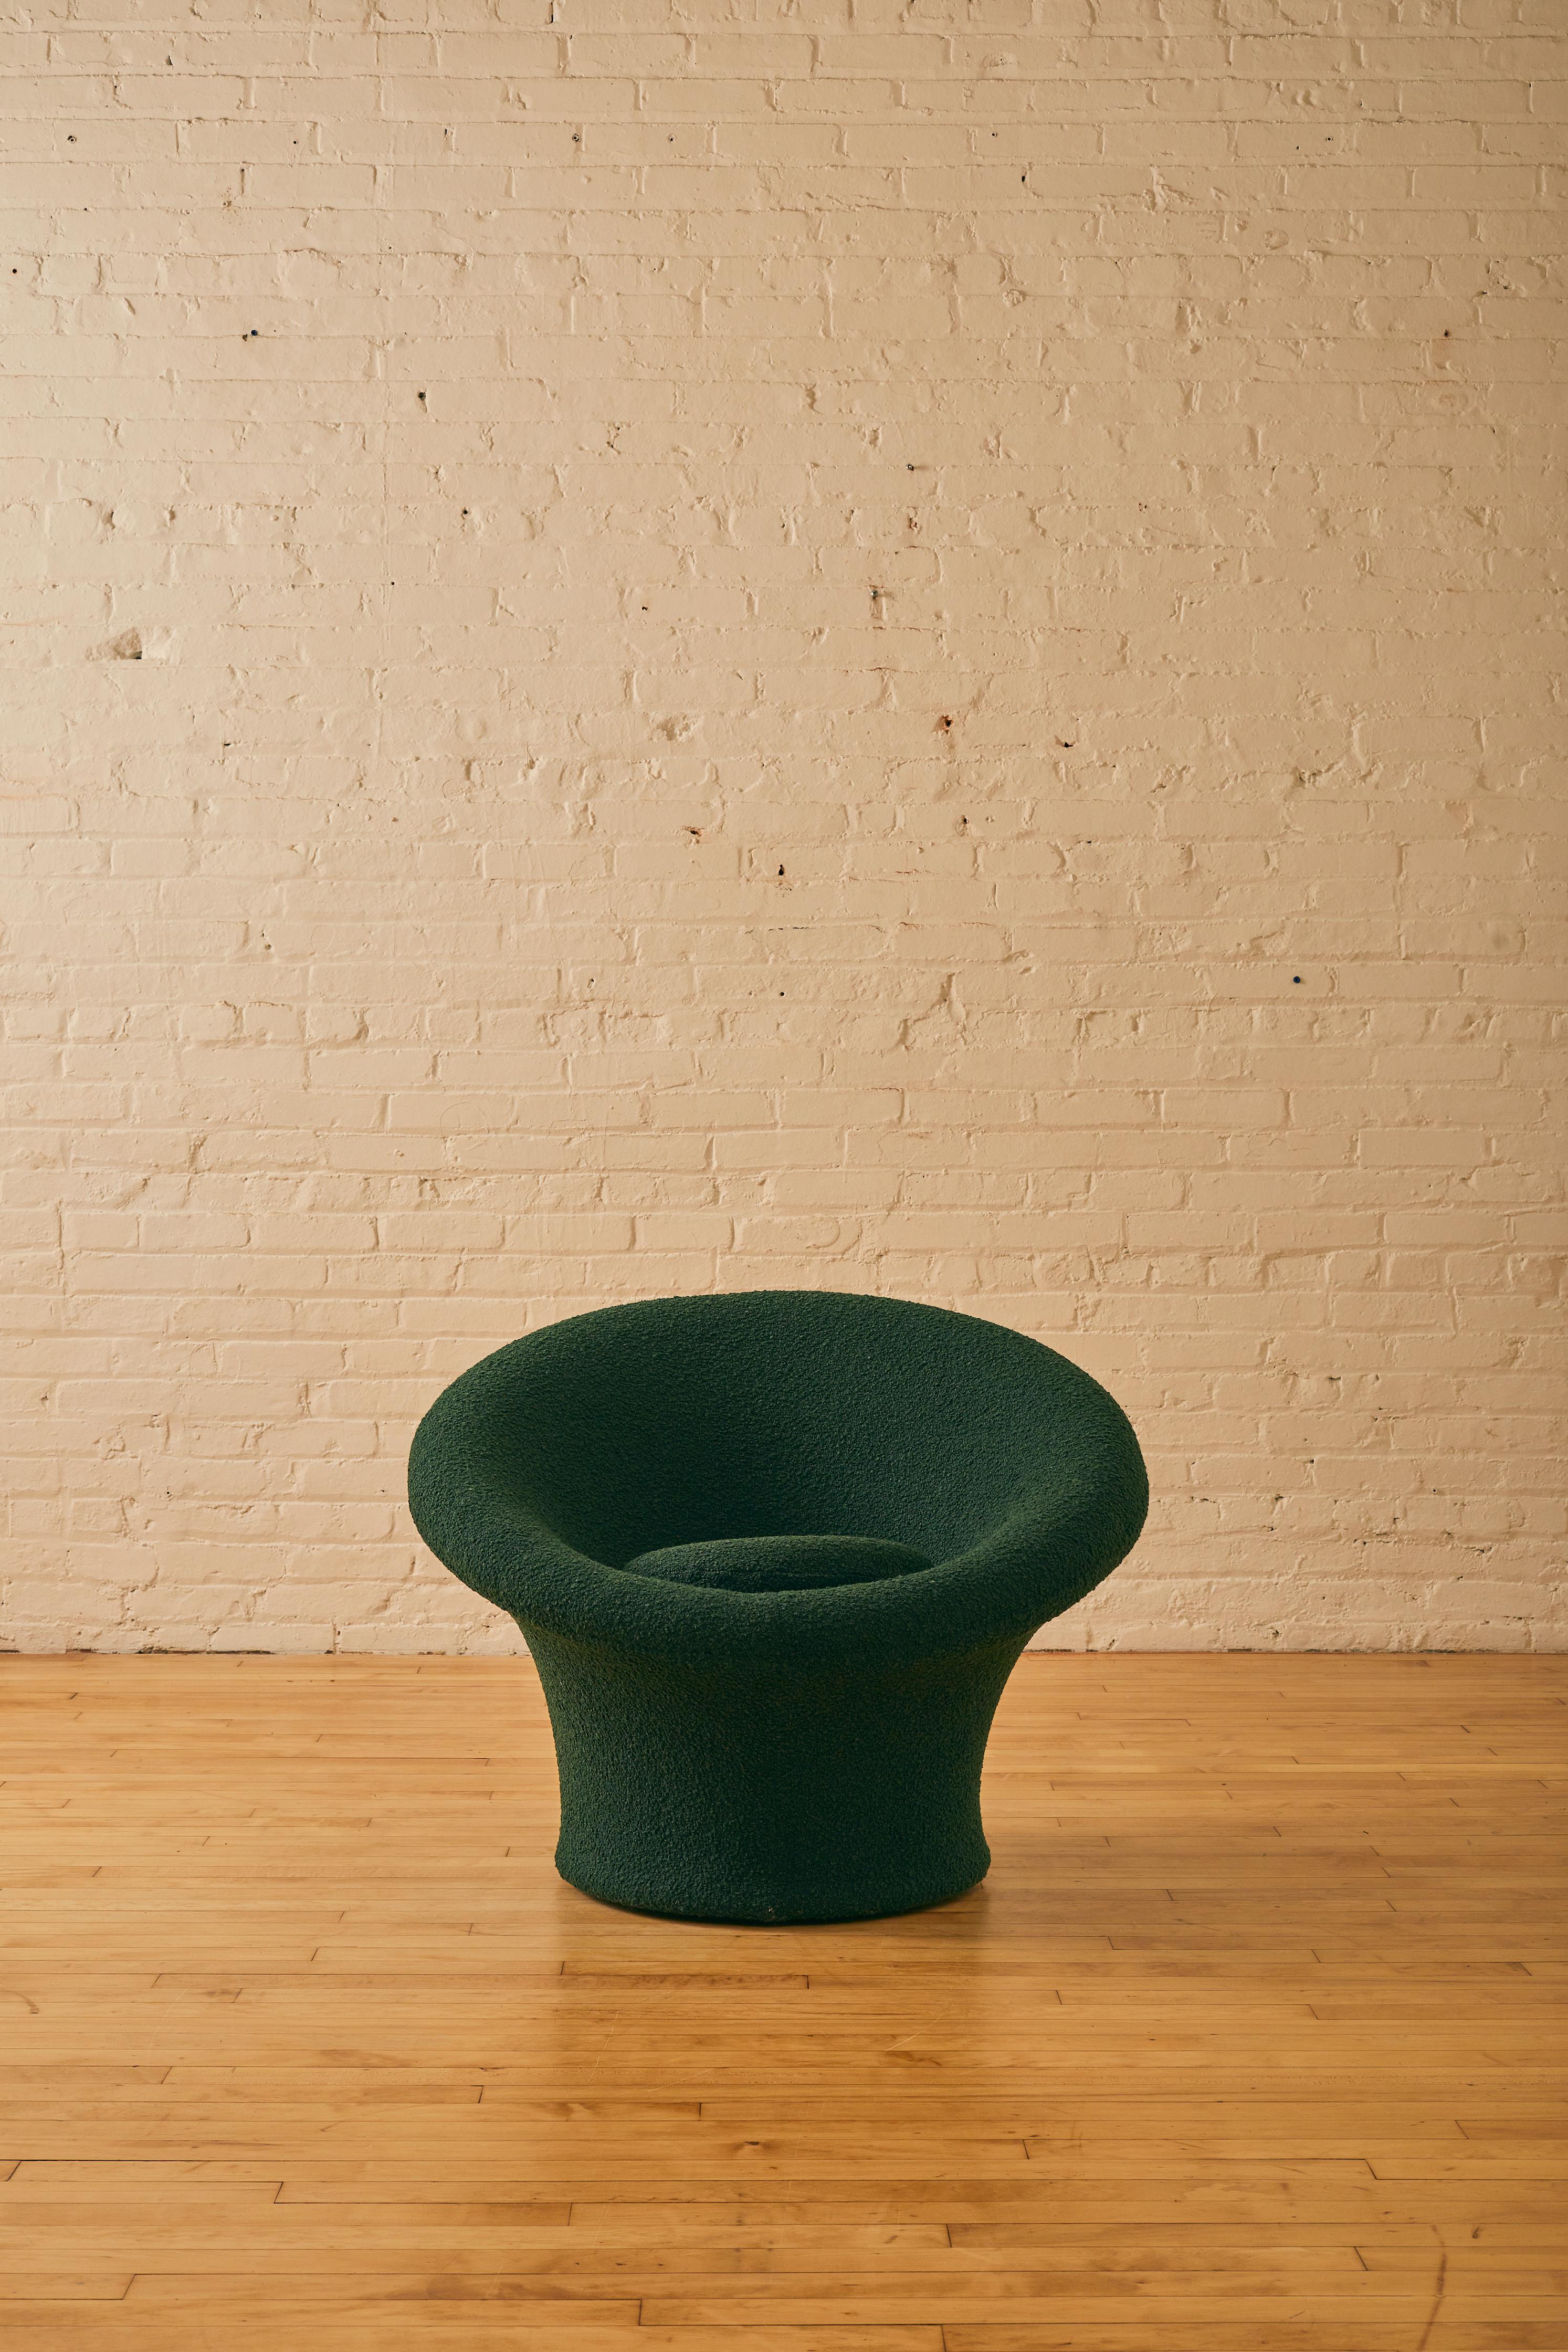 Mushroom chair by Pierre Paulin (Model F560).

